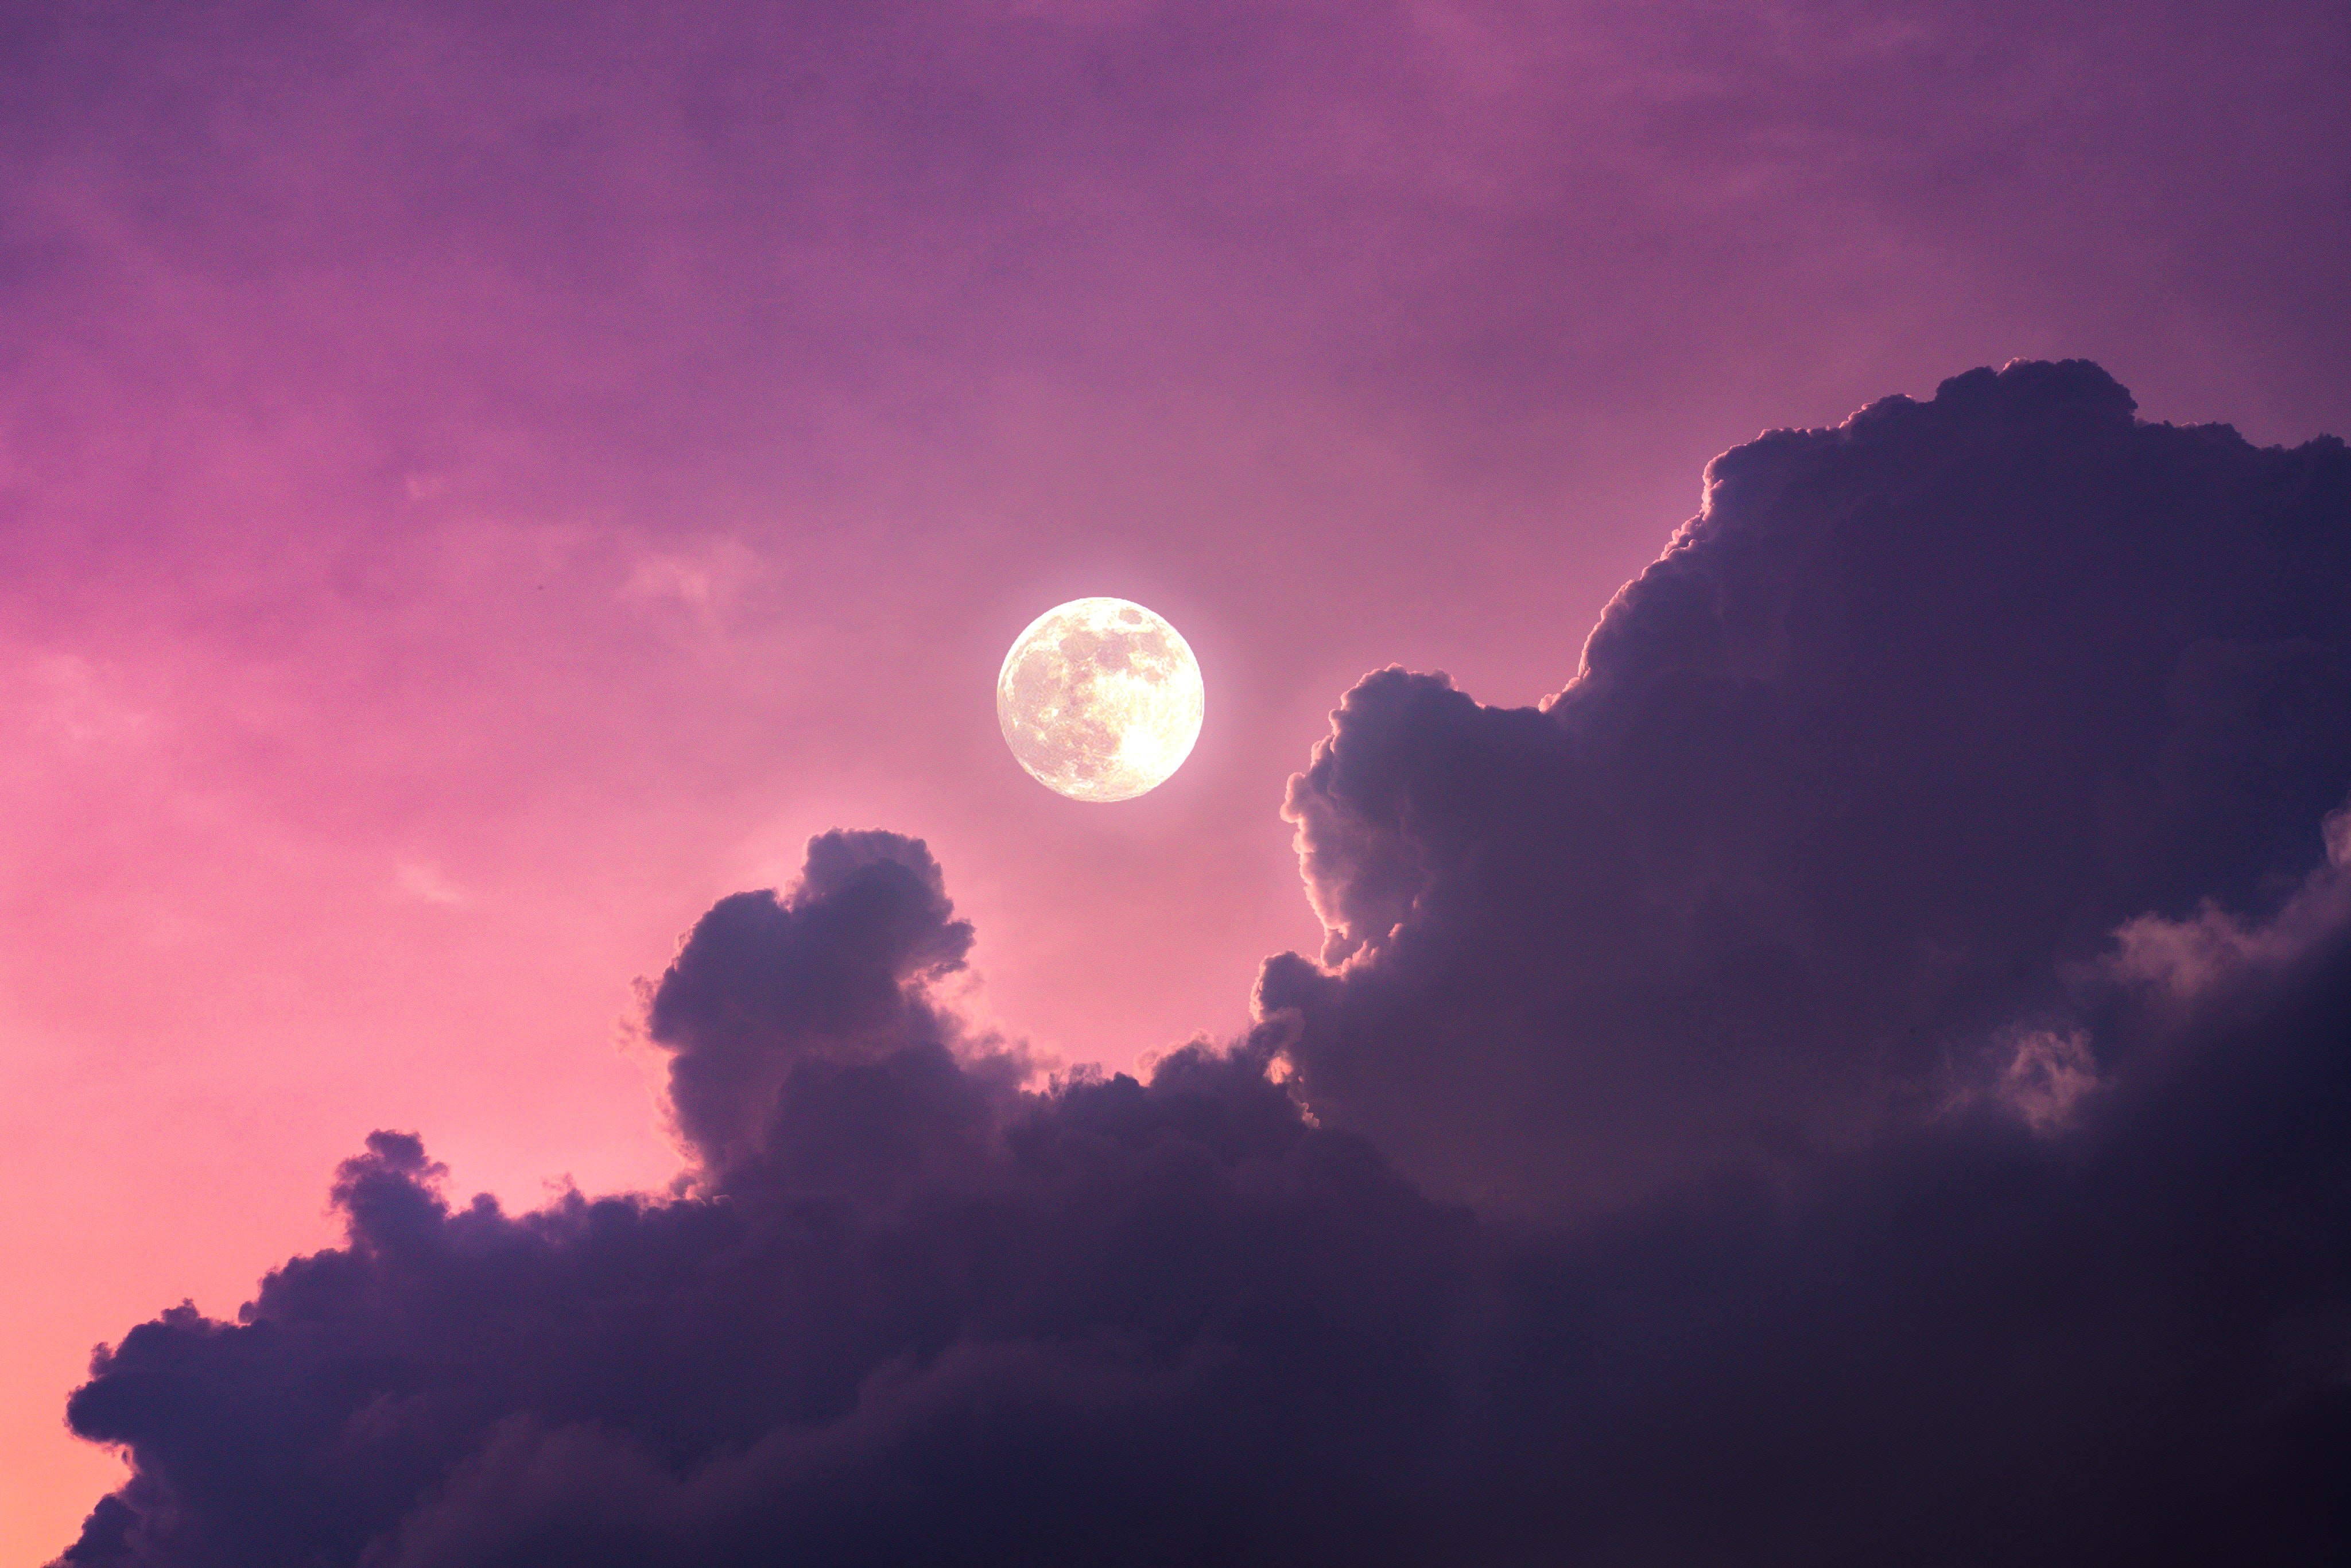 Full moon Wallpaper 4K, Aesthetic, Clouds, Pink sky